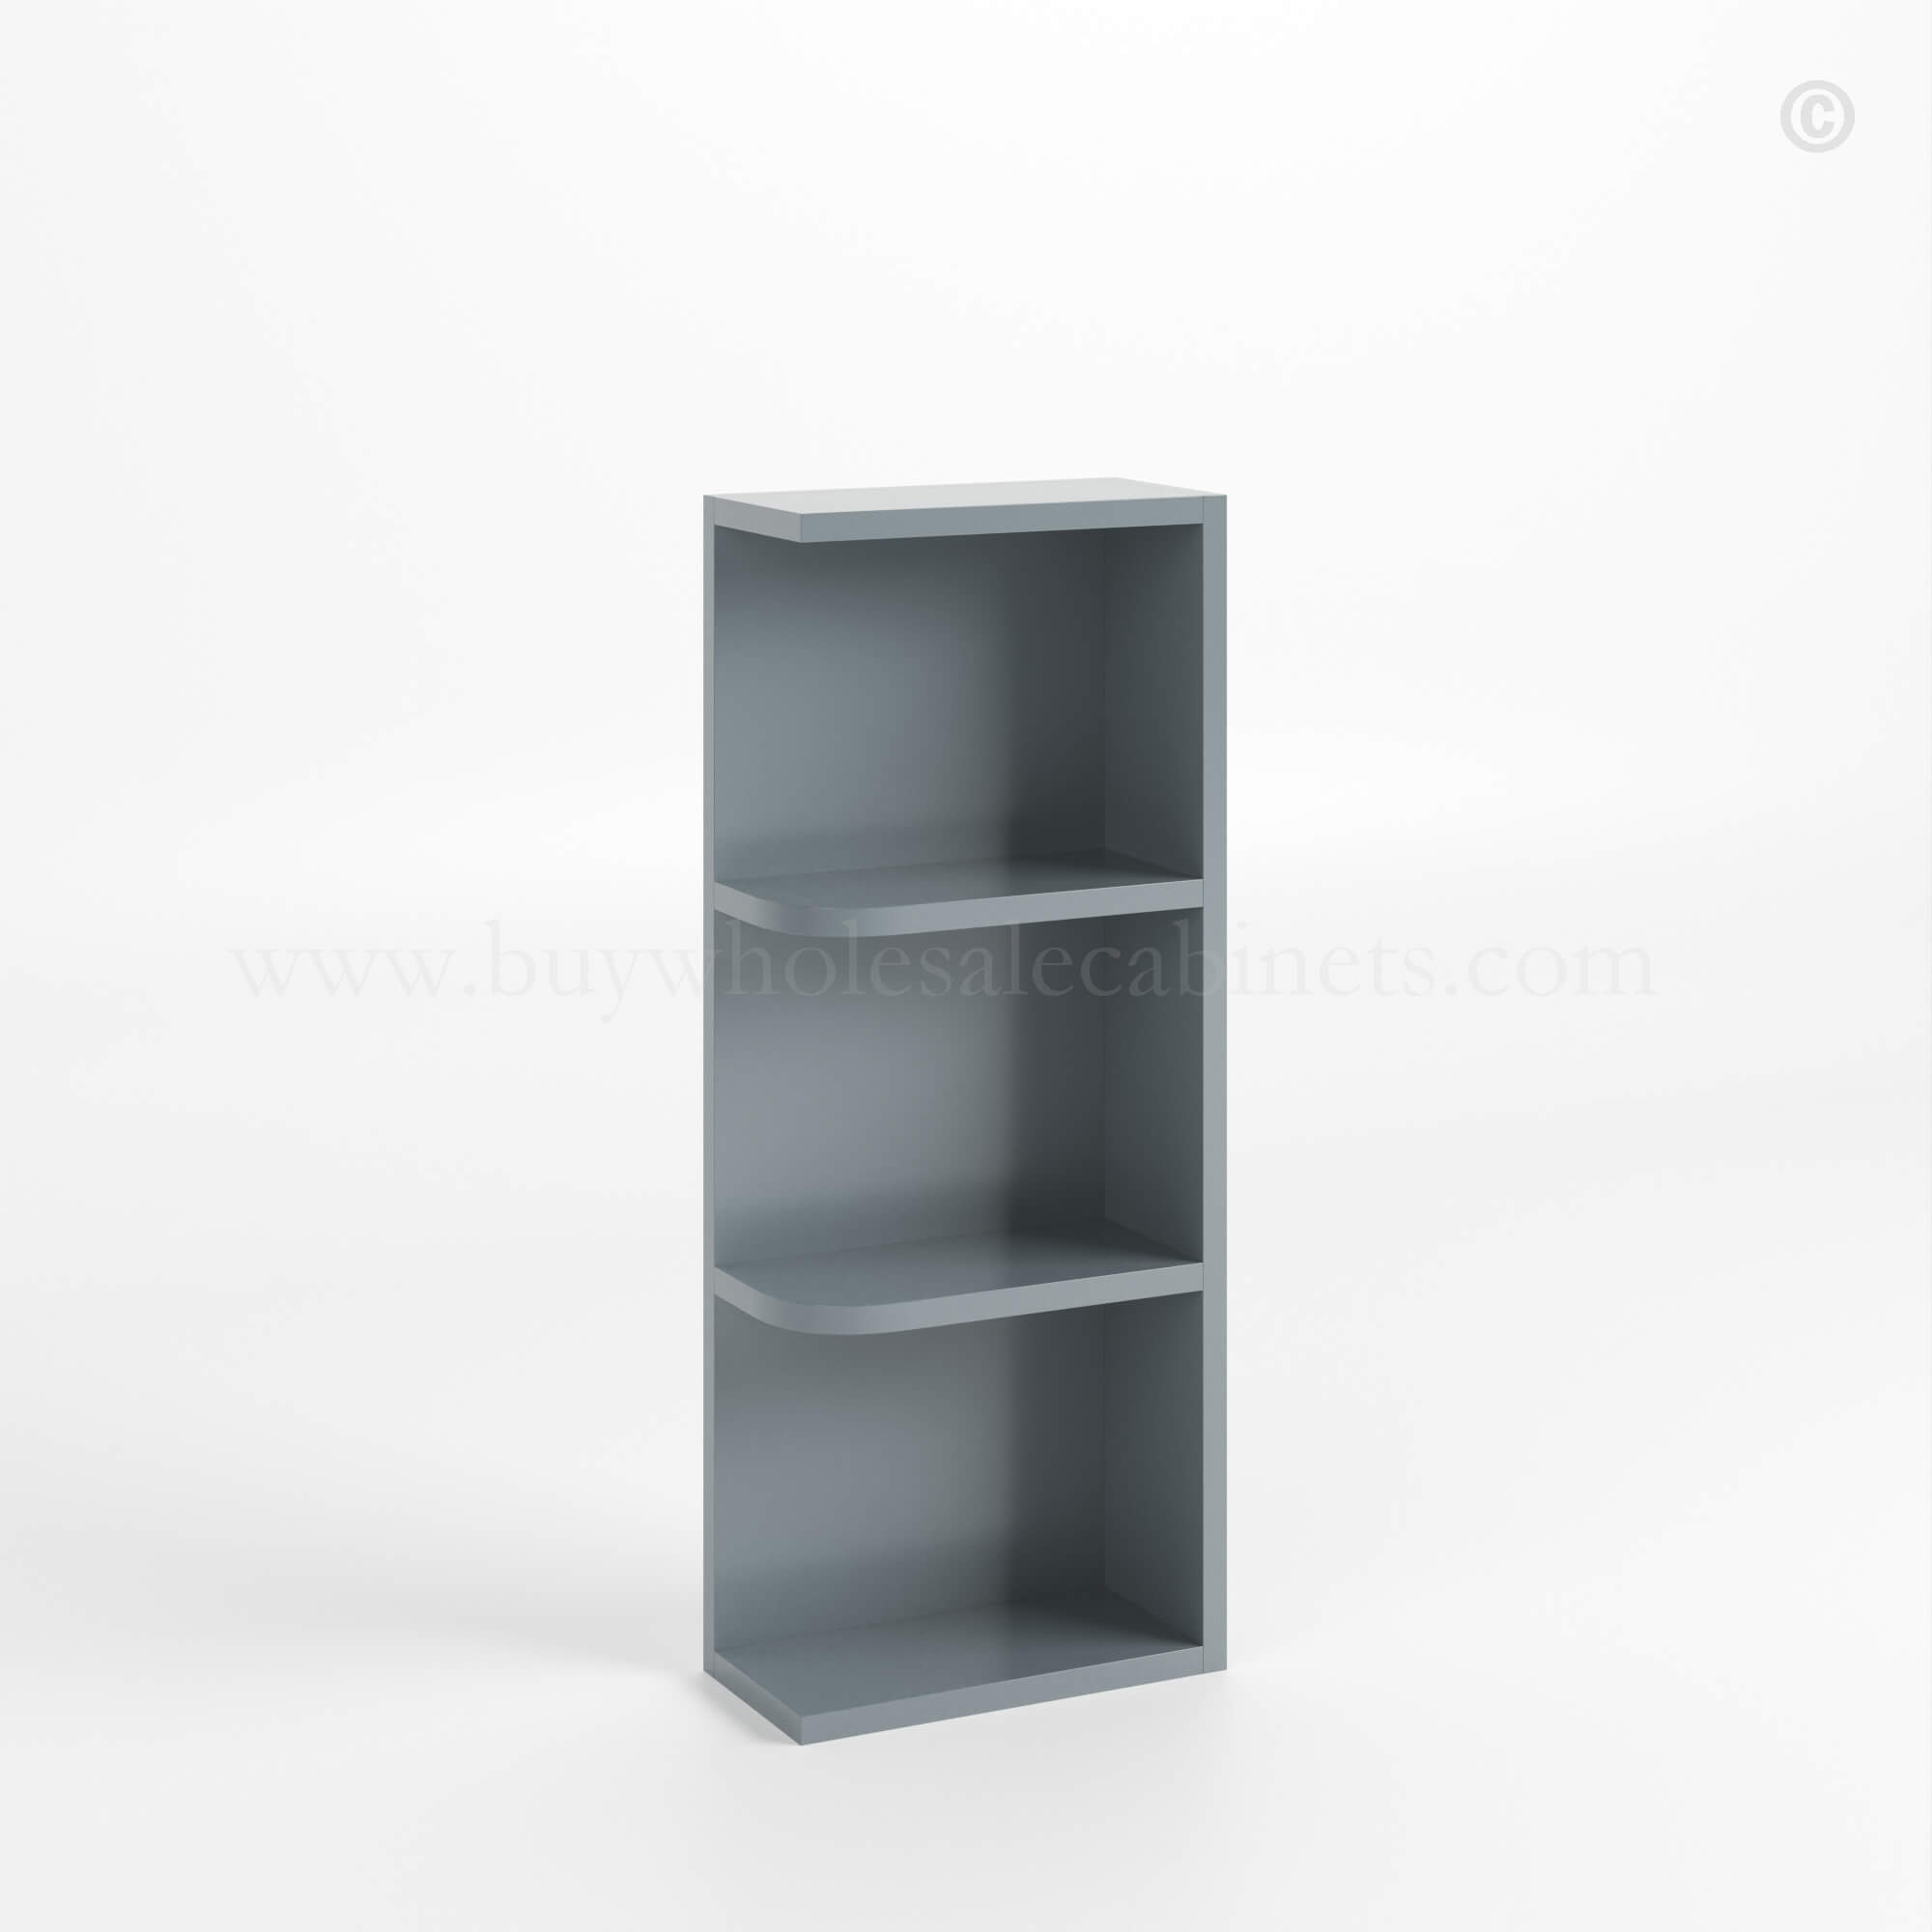 shaker gray cabinets